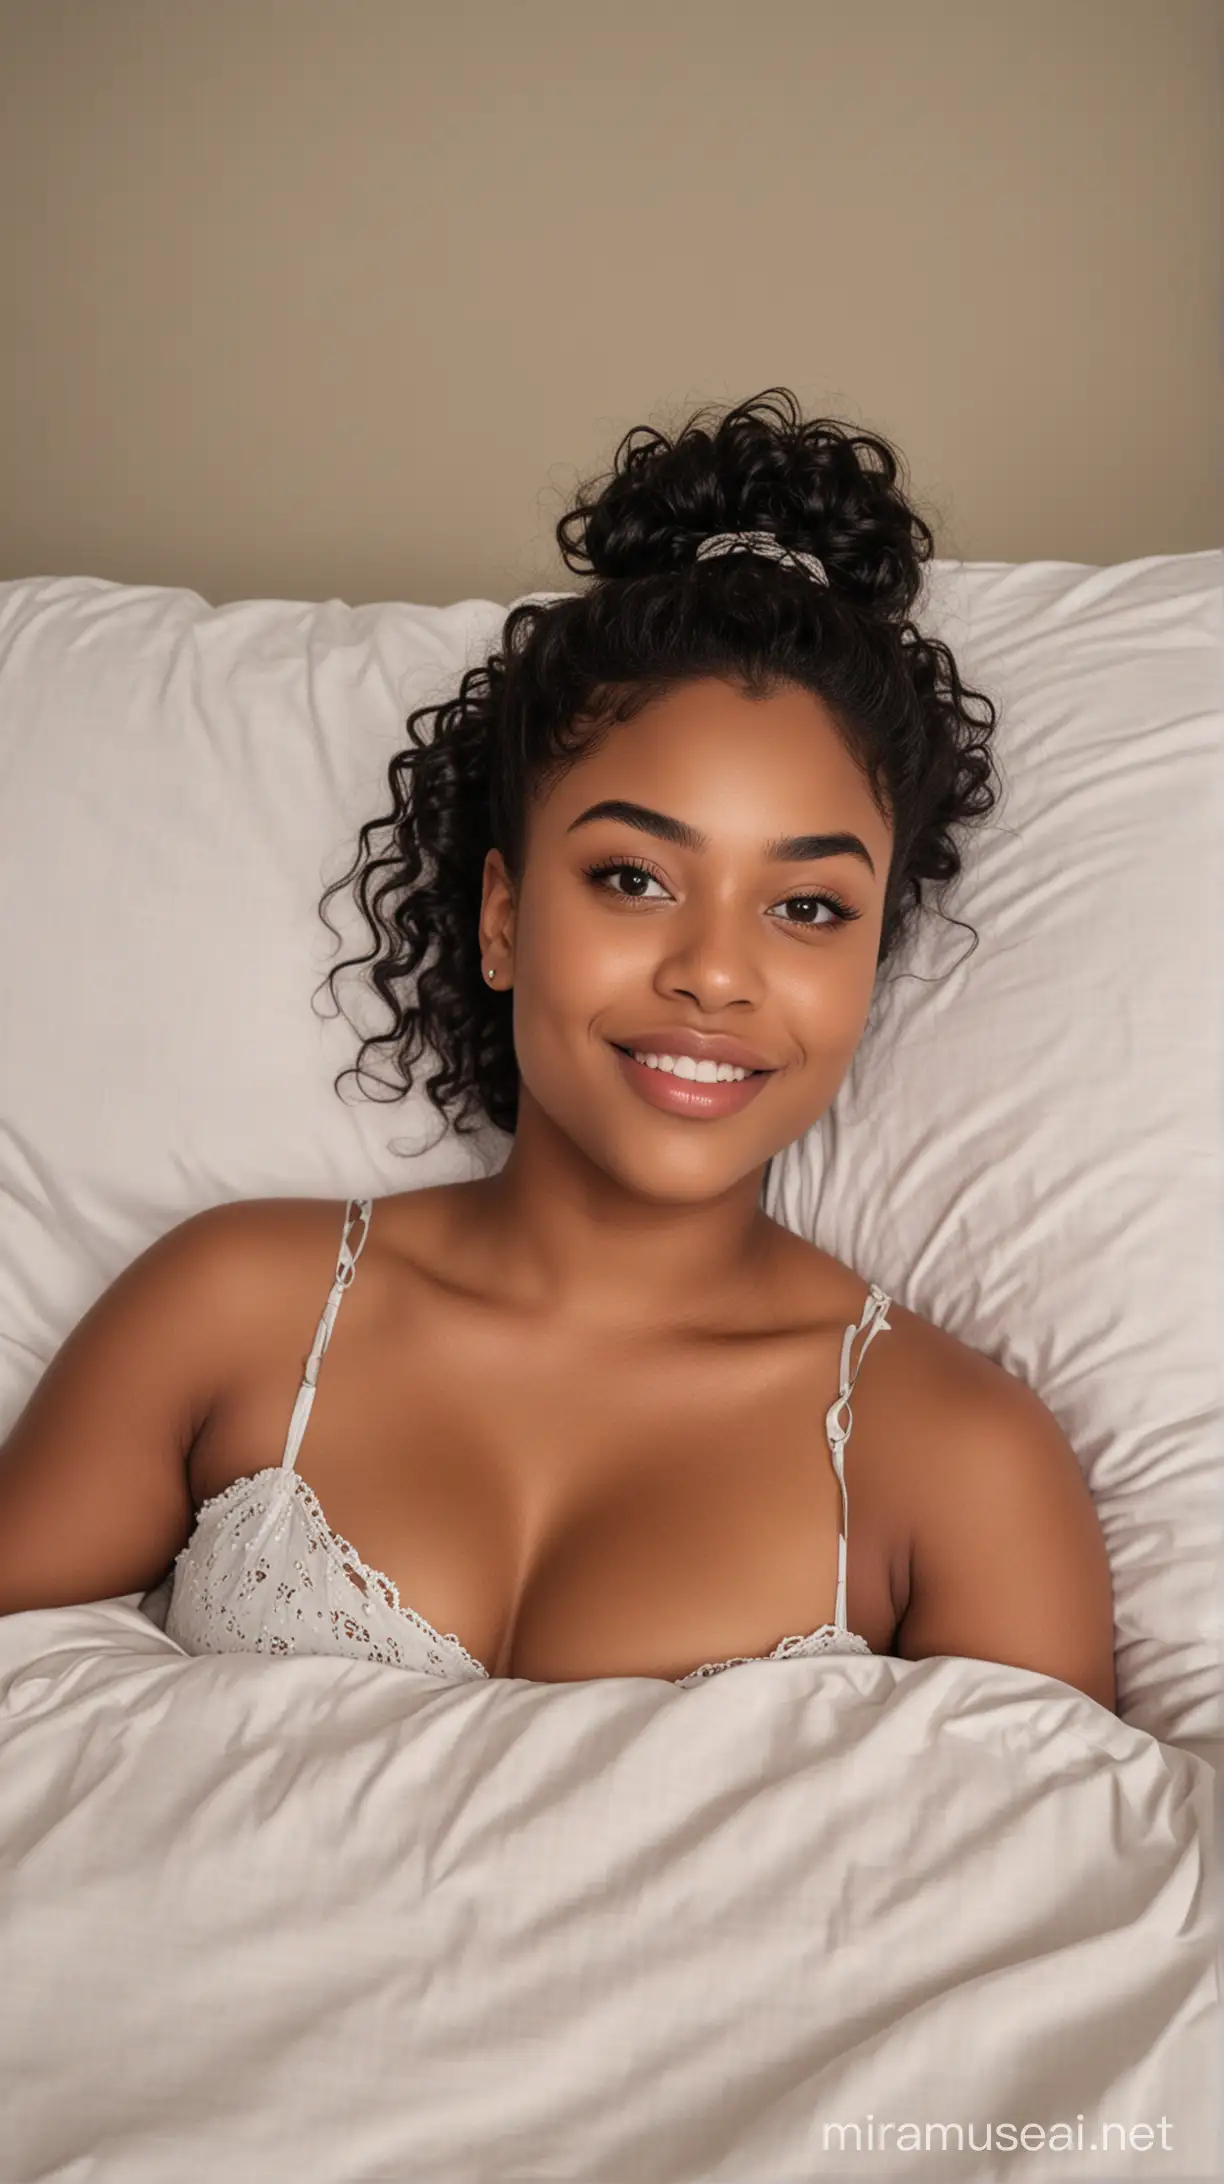 Smiling Fat Black Woman in Threaded Night Dress Lying Sideways on Bed